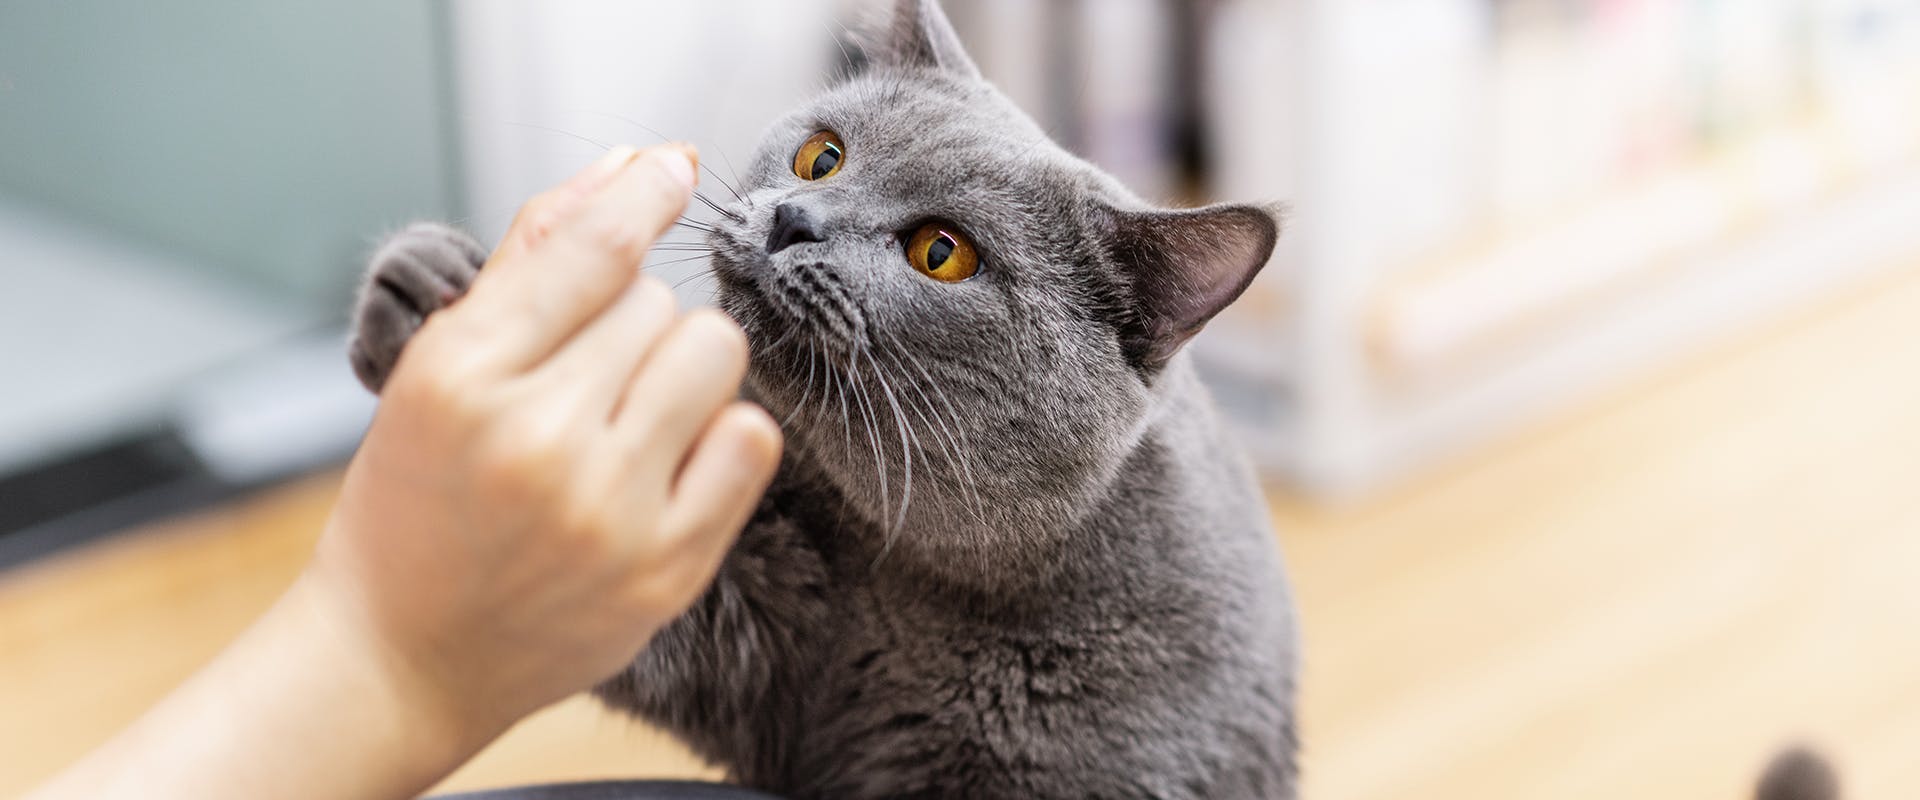 Popular cat names - a grey cat receiving a treat from a hand